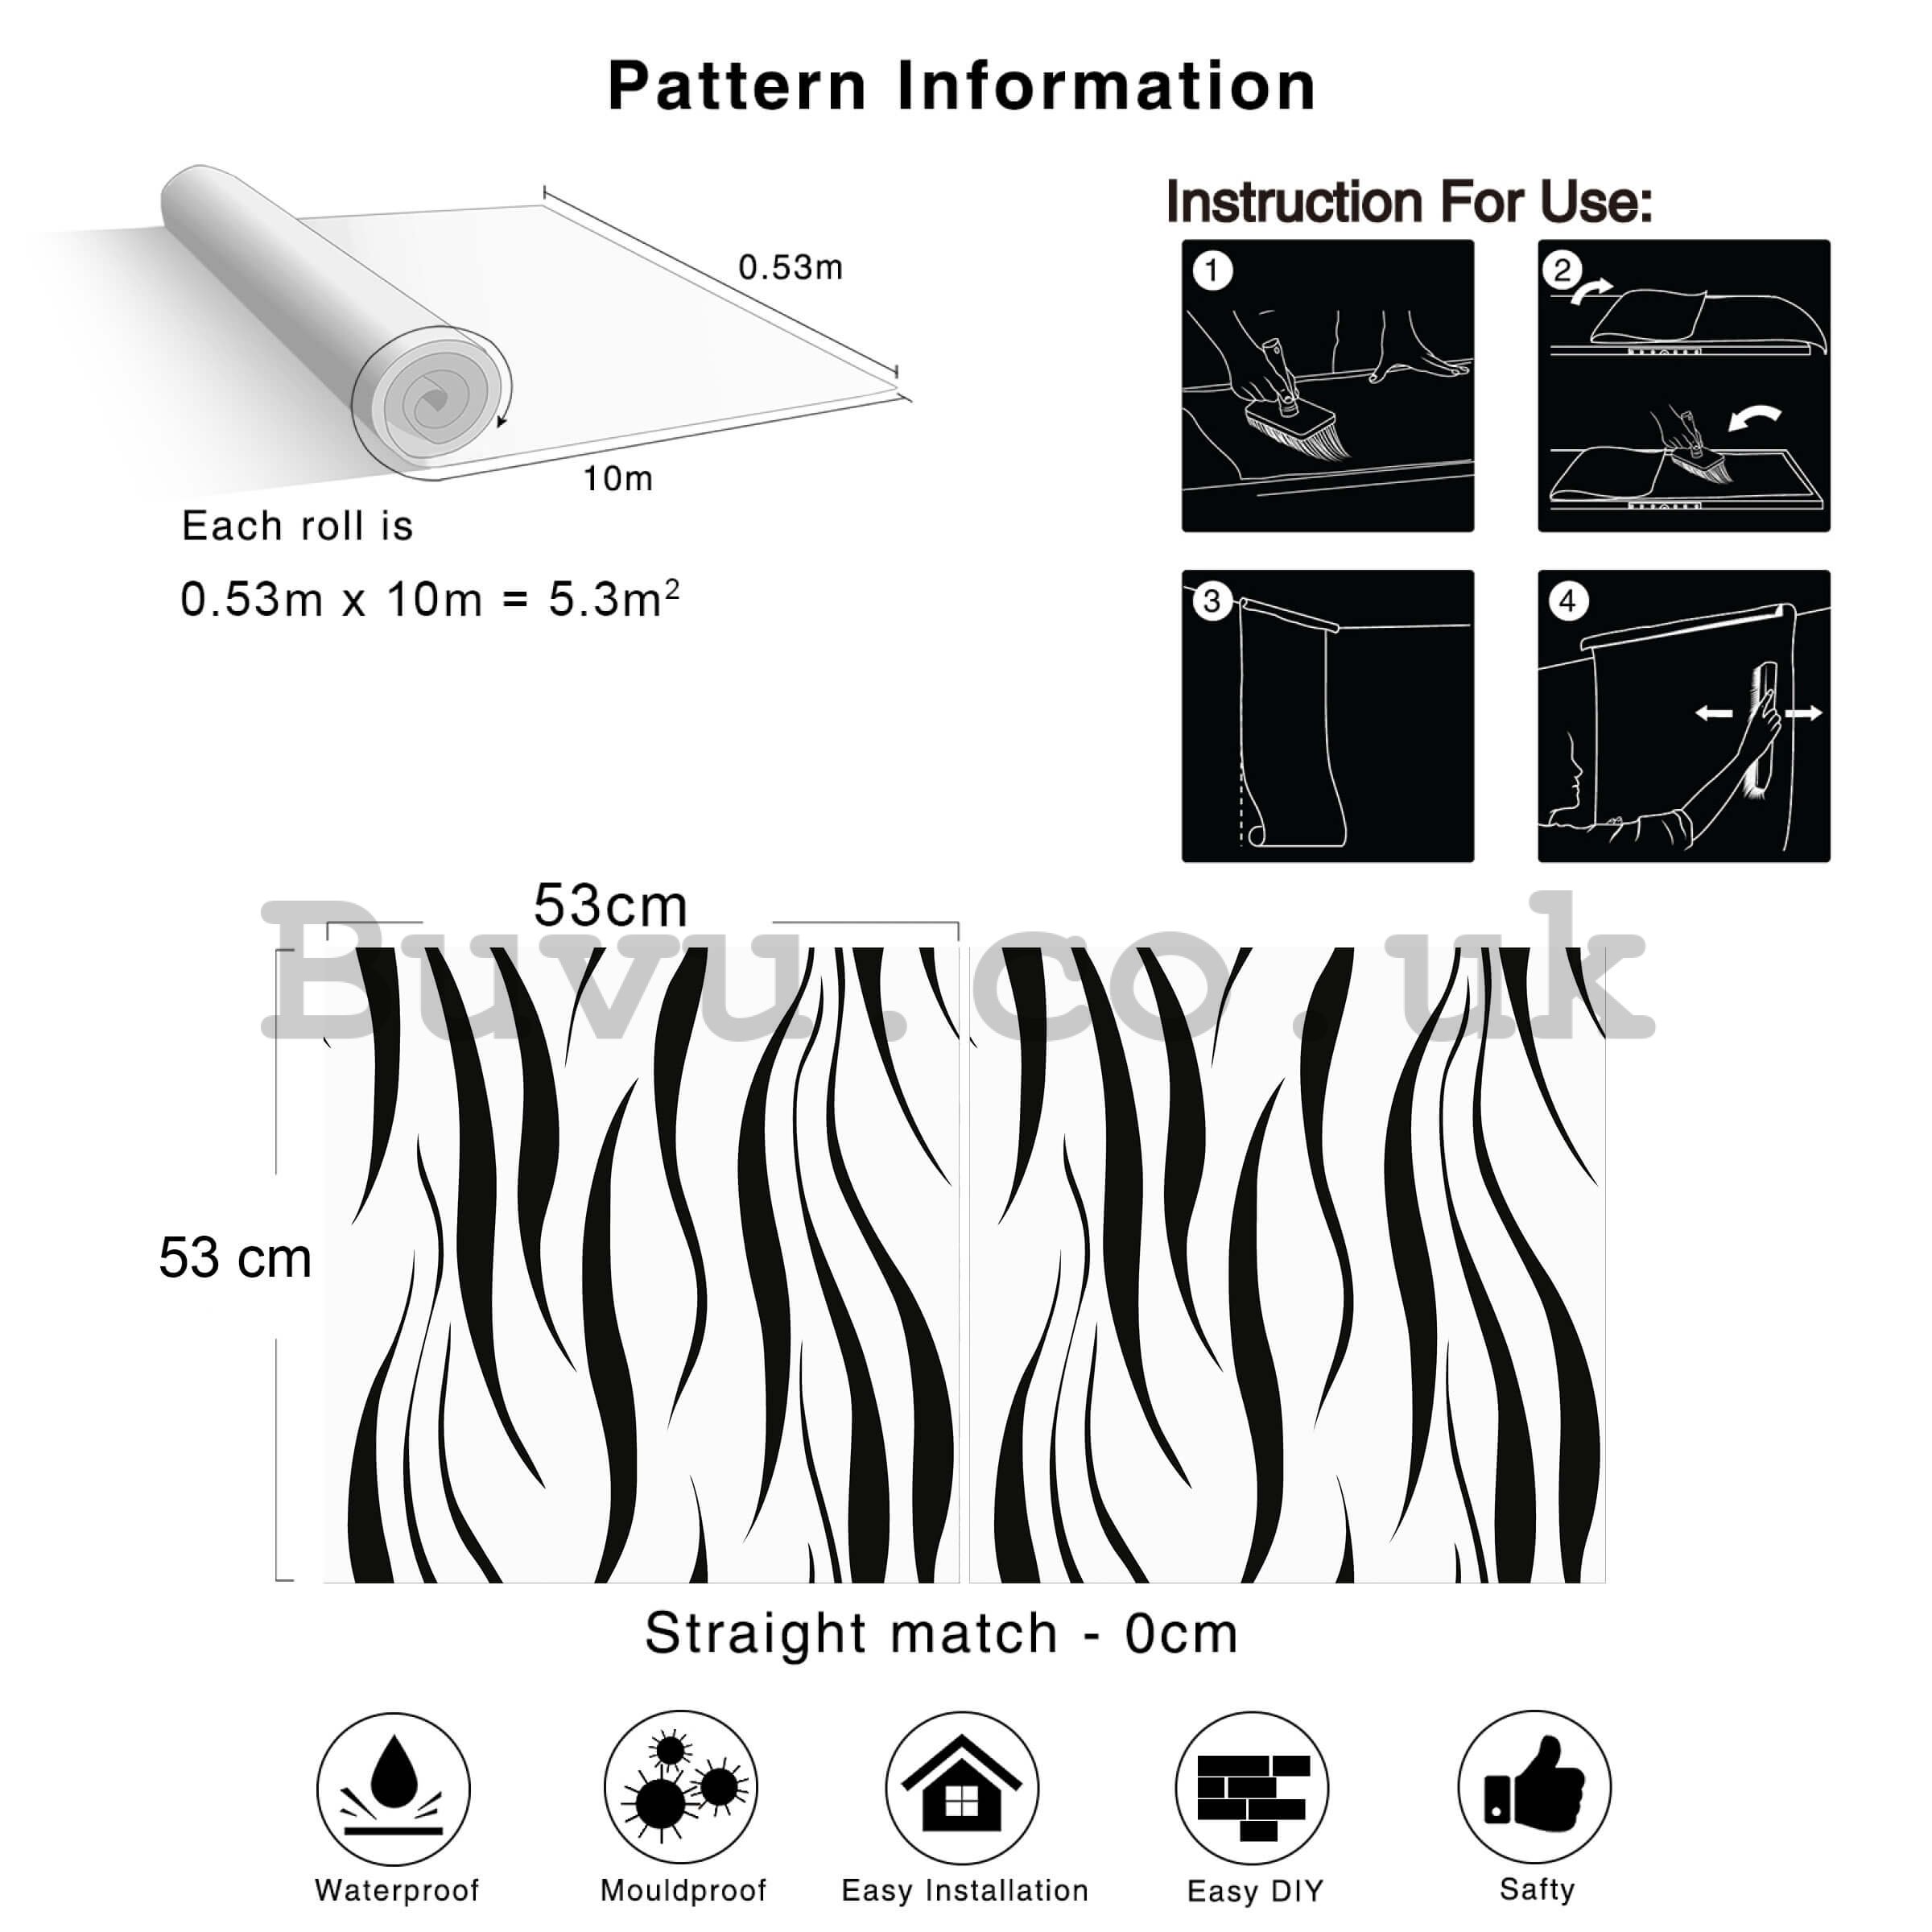 Vinyl wallpaper black-white wave pattern